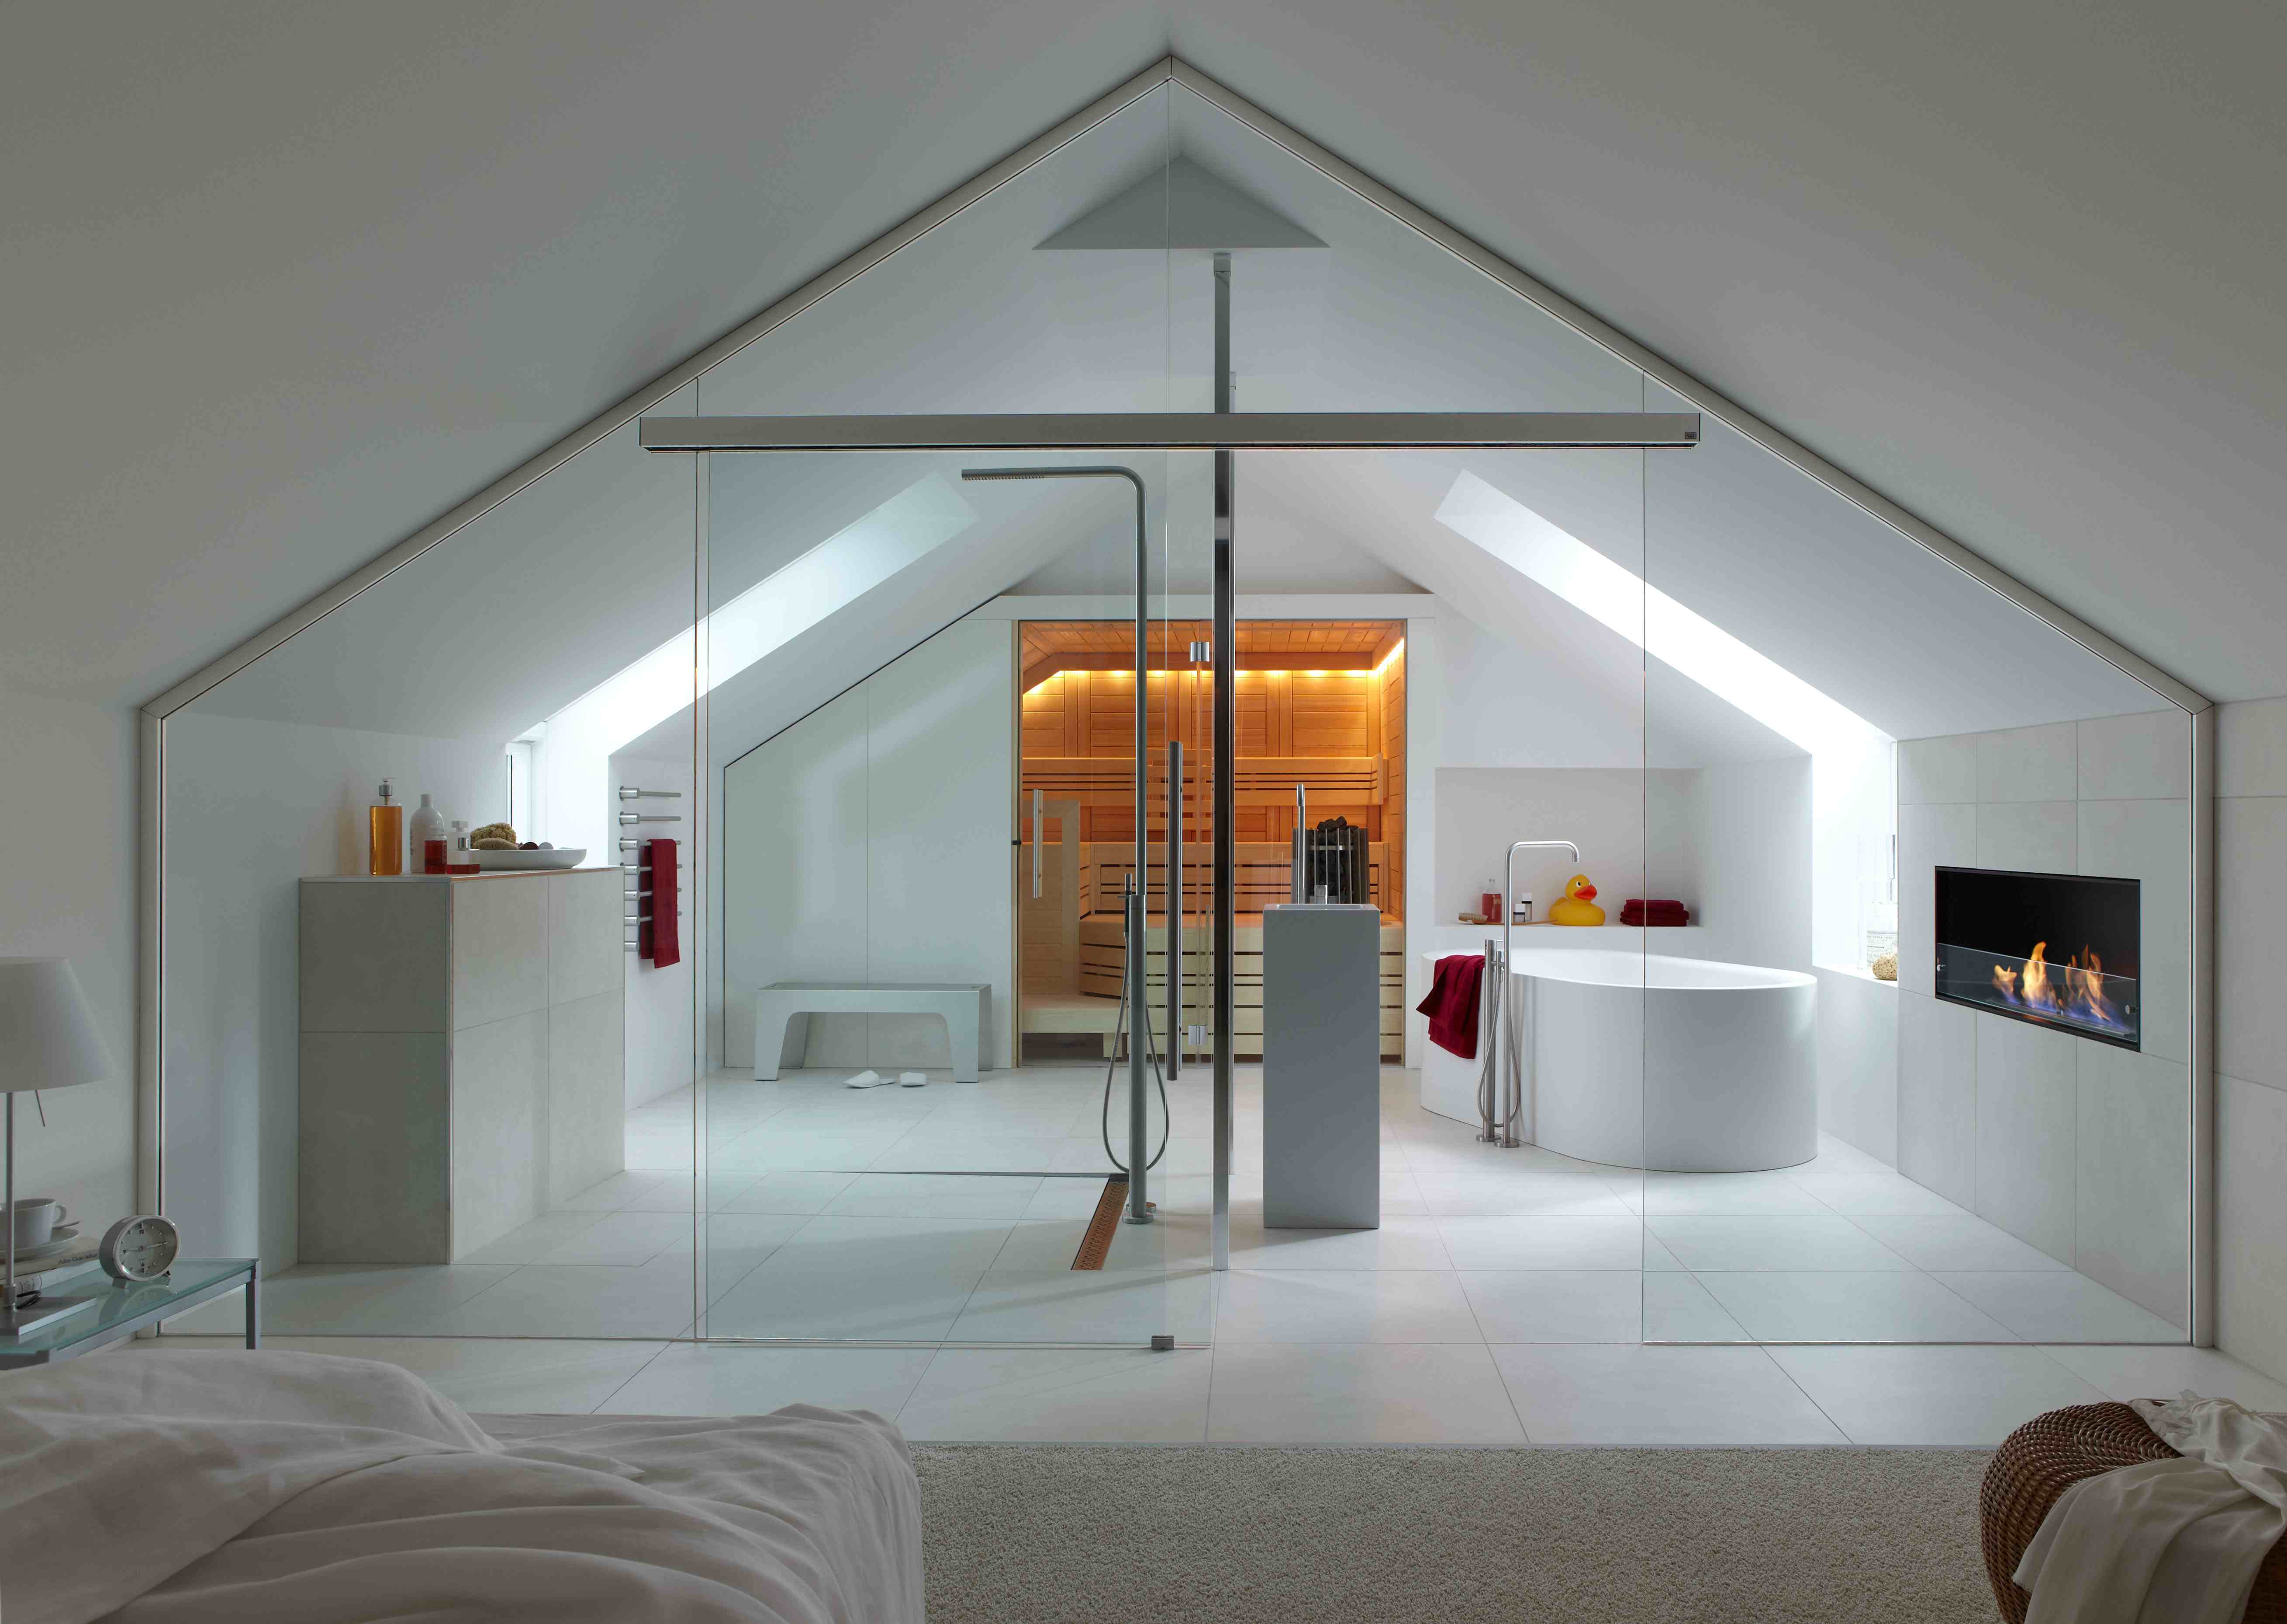 Bedroom and contemporary bath in a loft